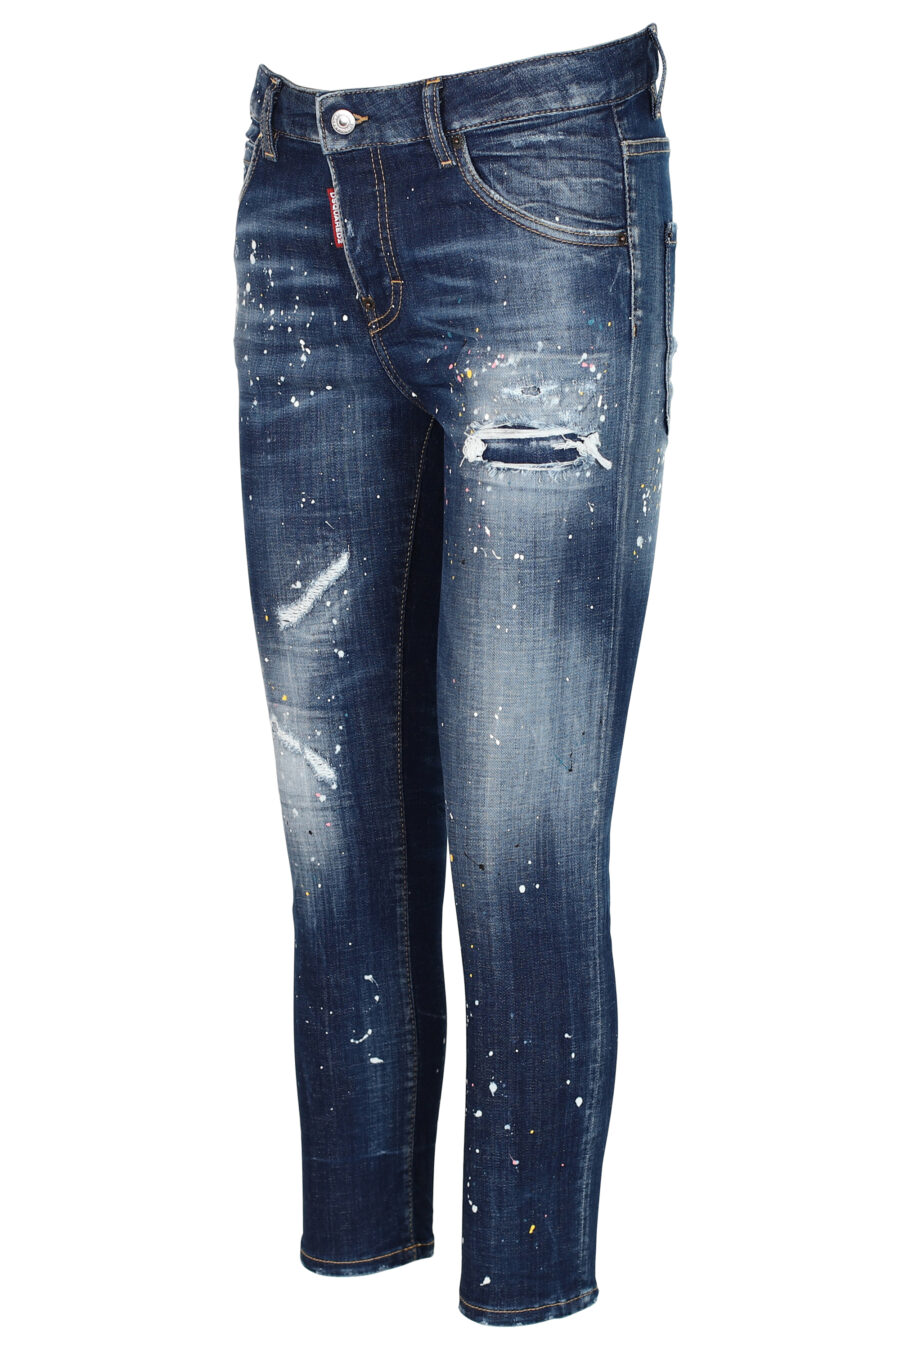 Cool girl cropped jean trousers "Cool girl cropped jean" blau getragen mit Rissen - 8052134942512 2